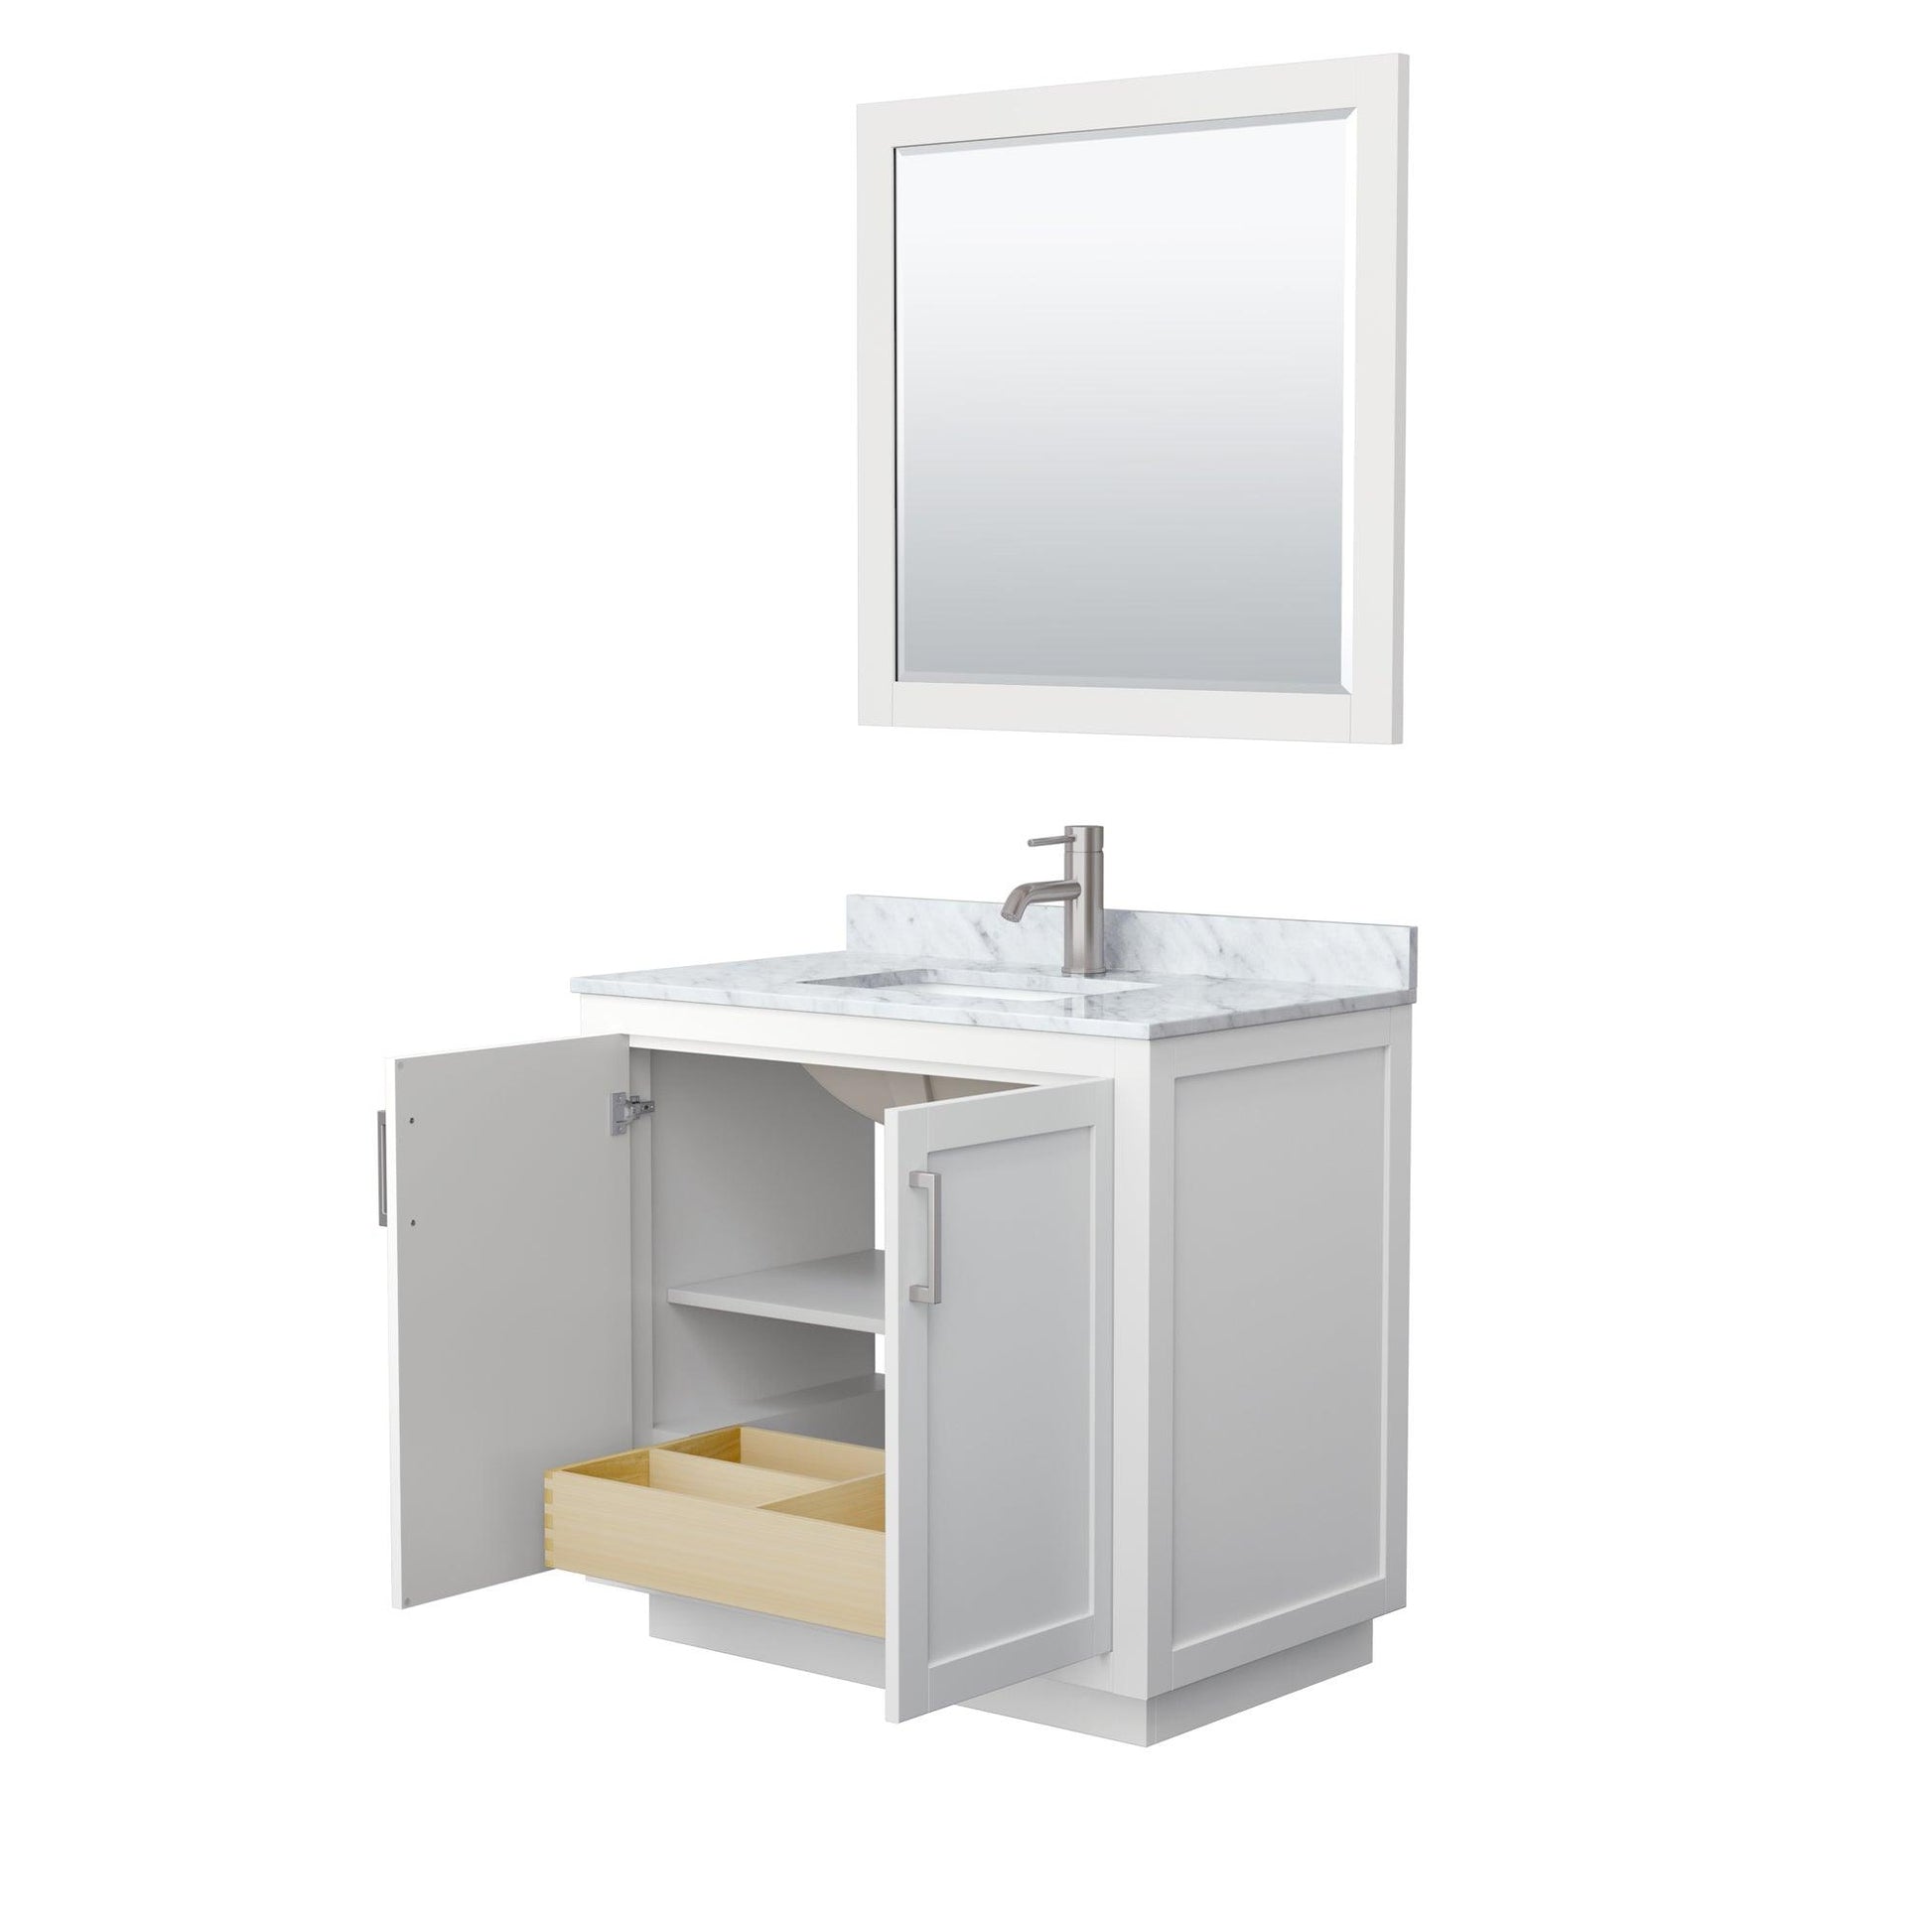 
  
  Wyndham Collection Miranda Single Bathroom Vanity in White, White Carrara Marble Countertop, Undermount Square Sink, Complementary Trim, Optional Mirror
  
